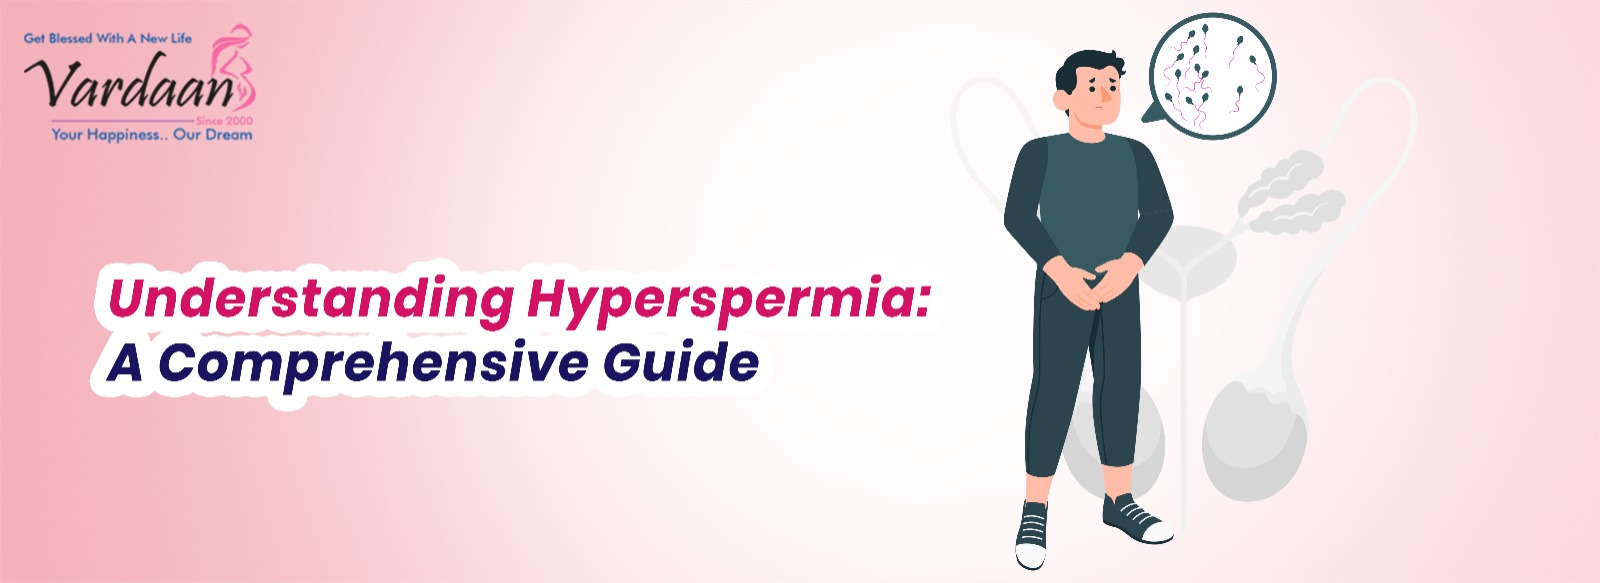 Hyperspermia